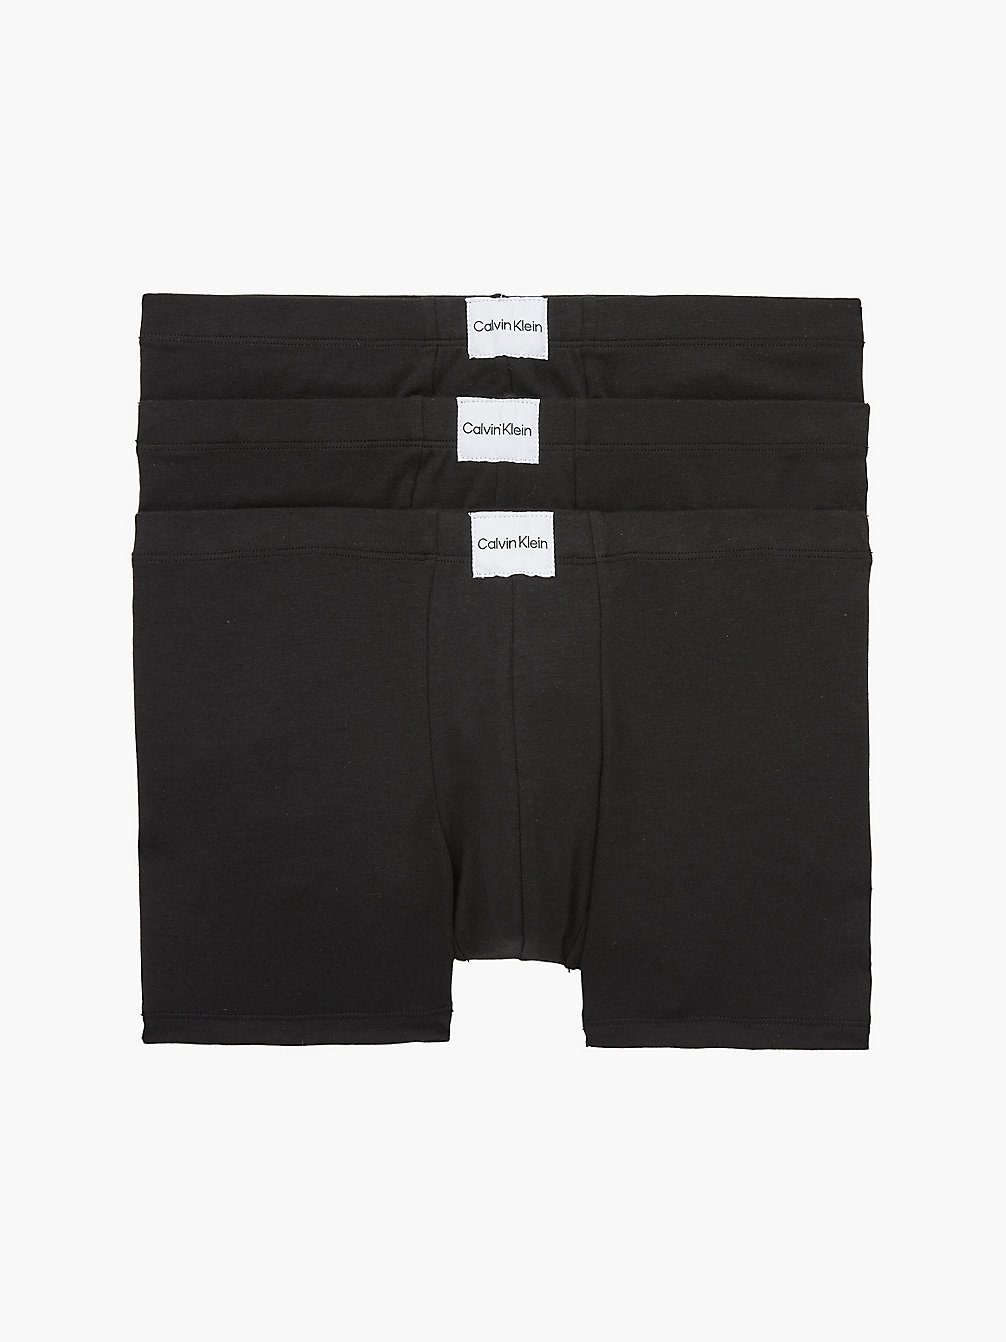 BLACK/ BLACK/ BLACK 3er-Pack Boxershorts – Pure Cotton undefined Herren Calvin Klein